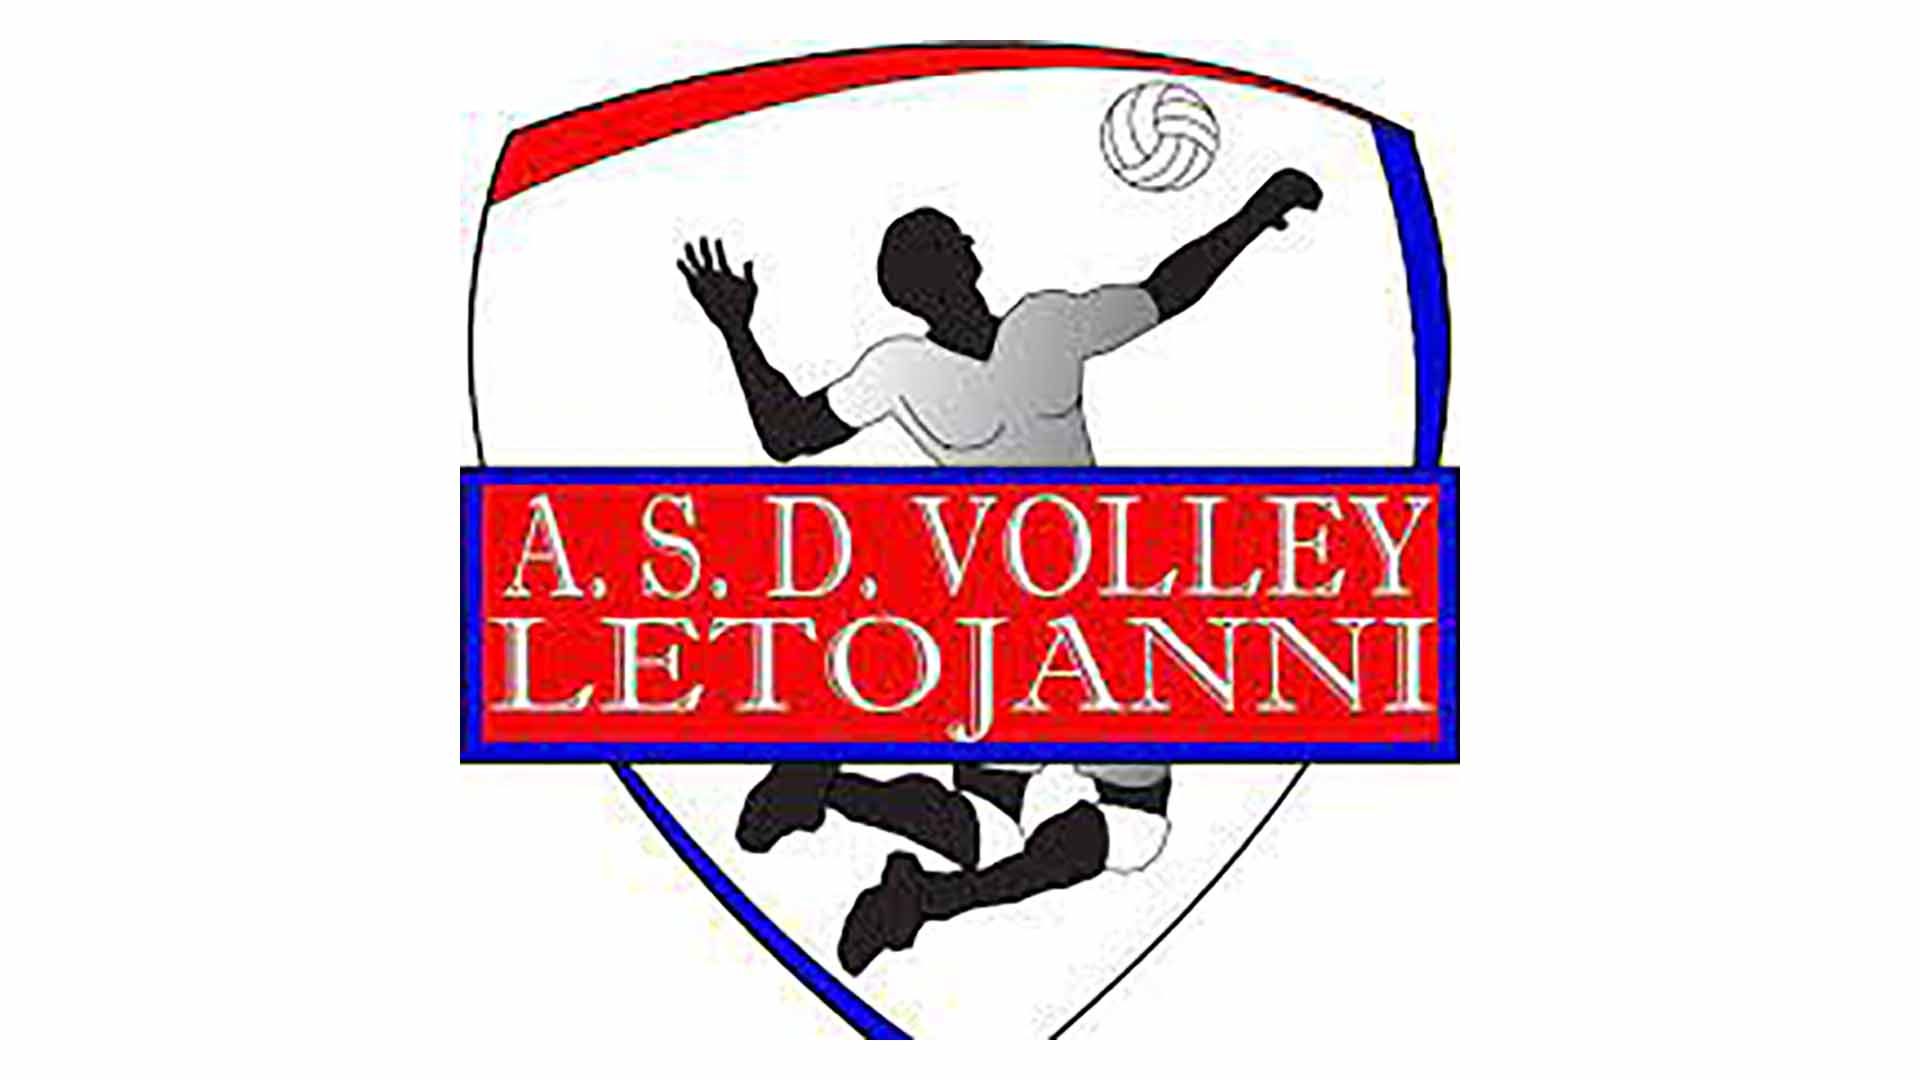 Volley Letojanni